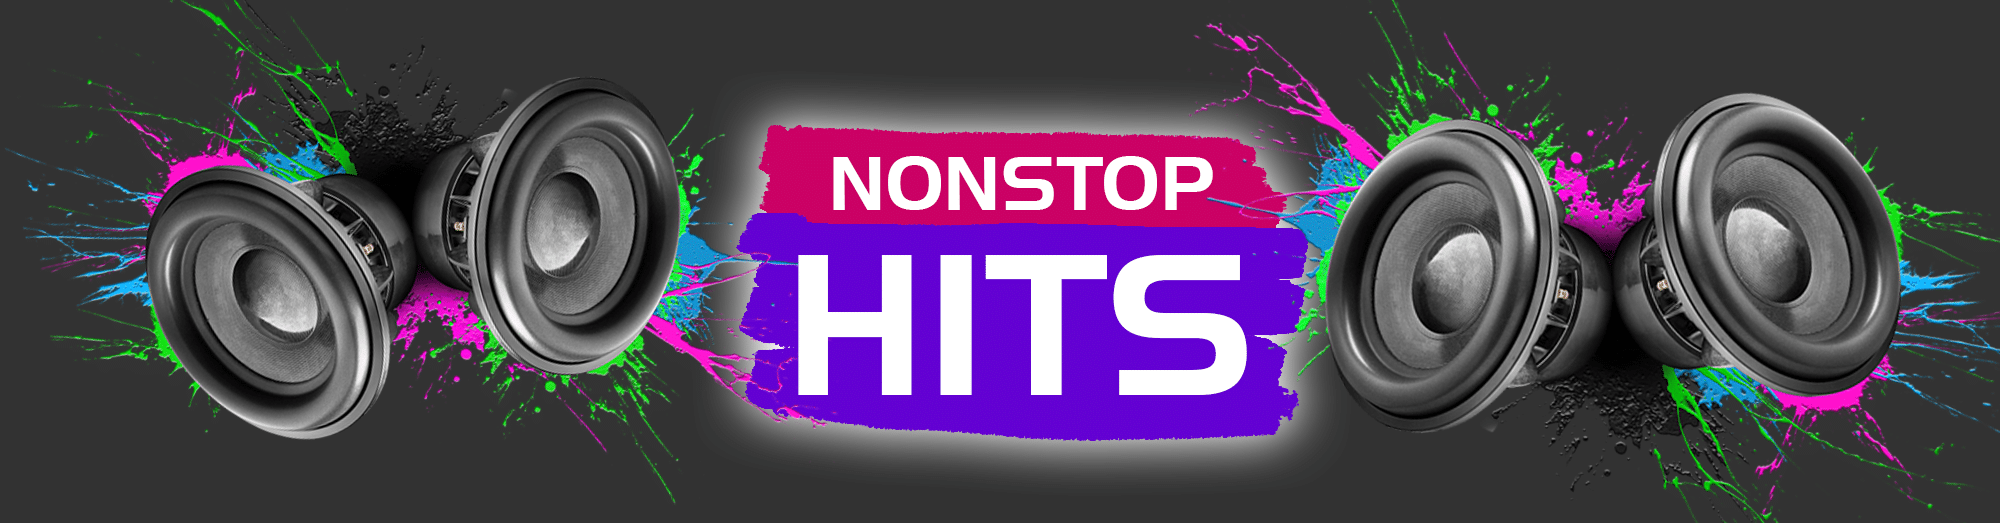 NoNstop-hits